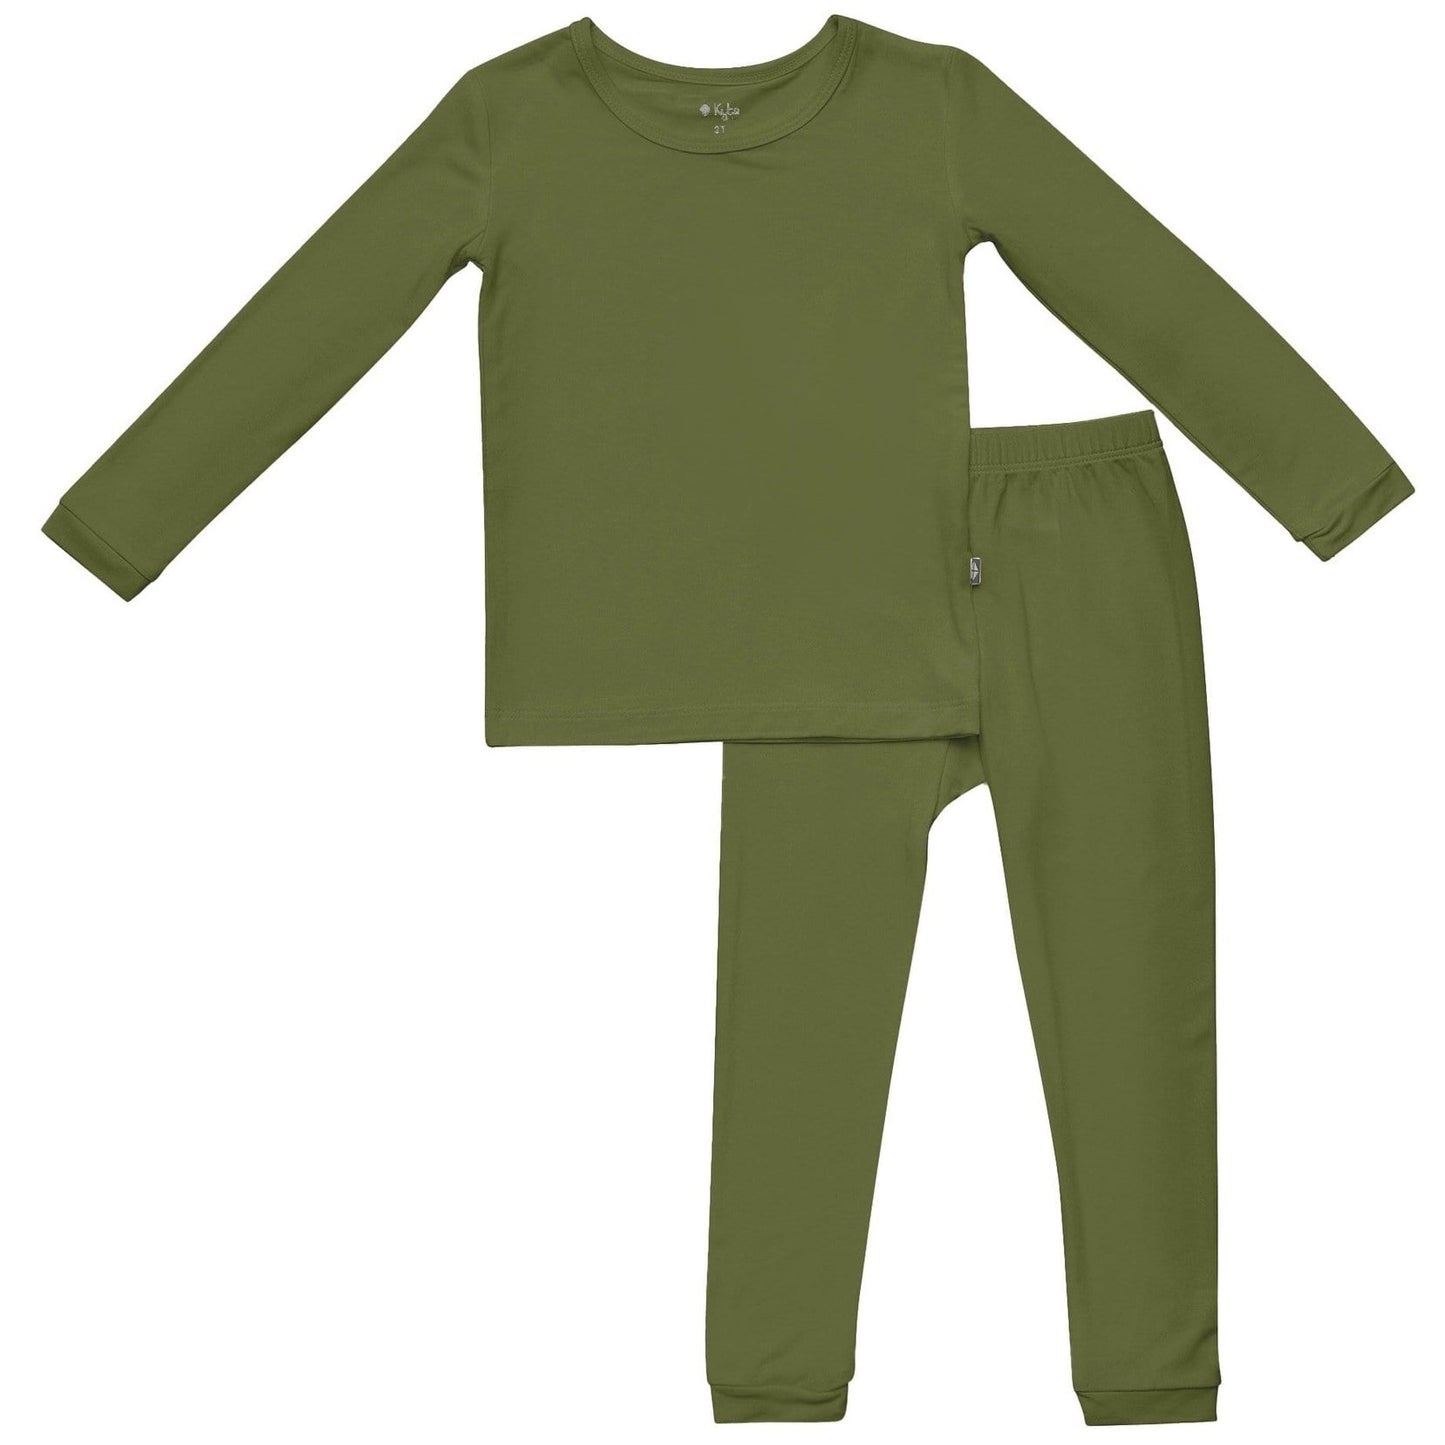 Olive Toddler Pajama Set